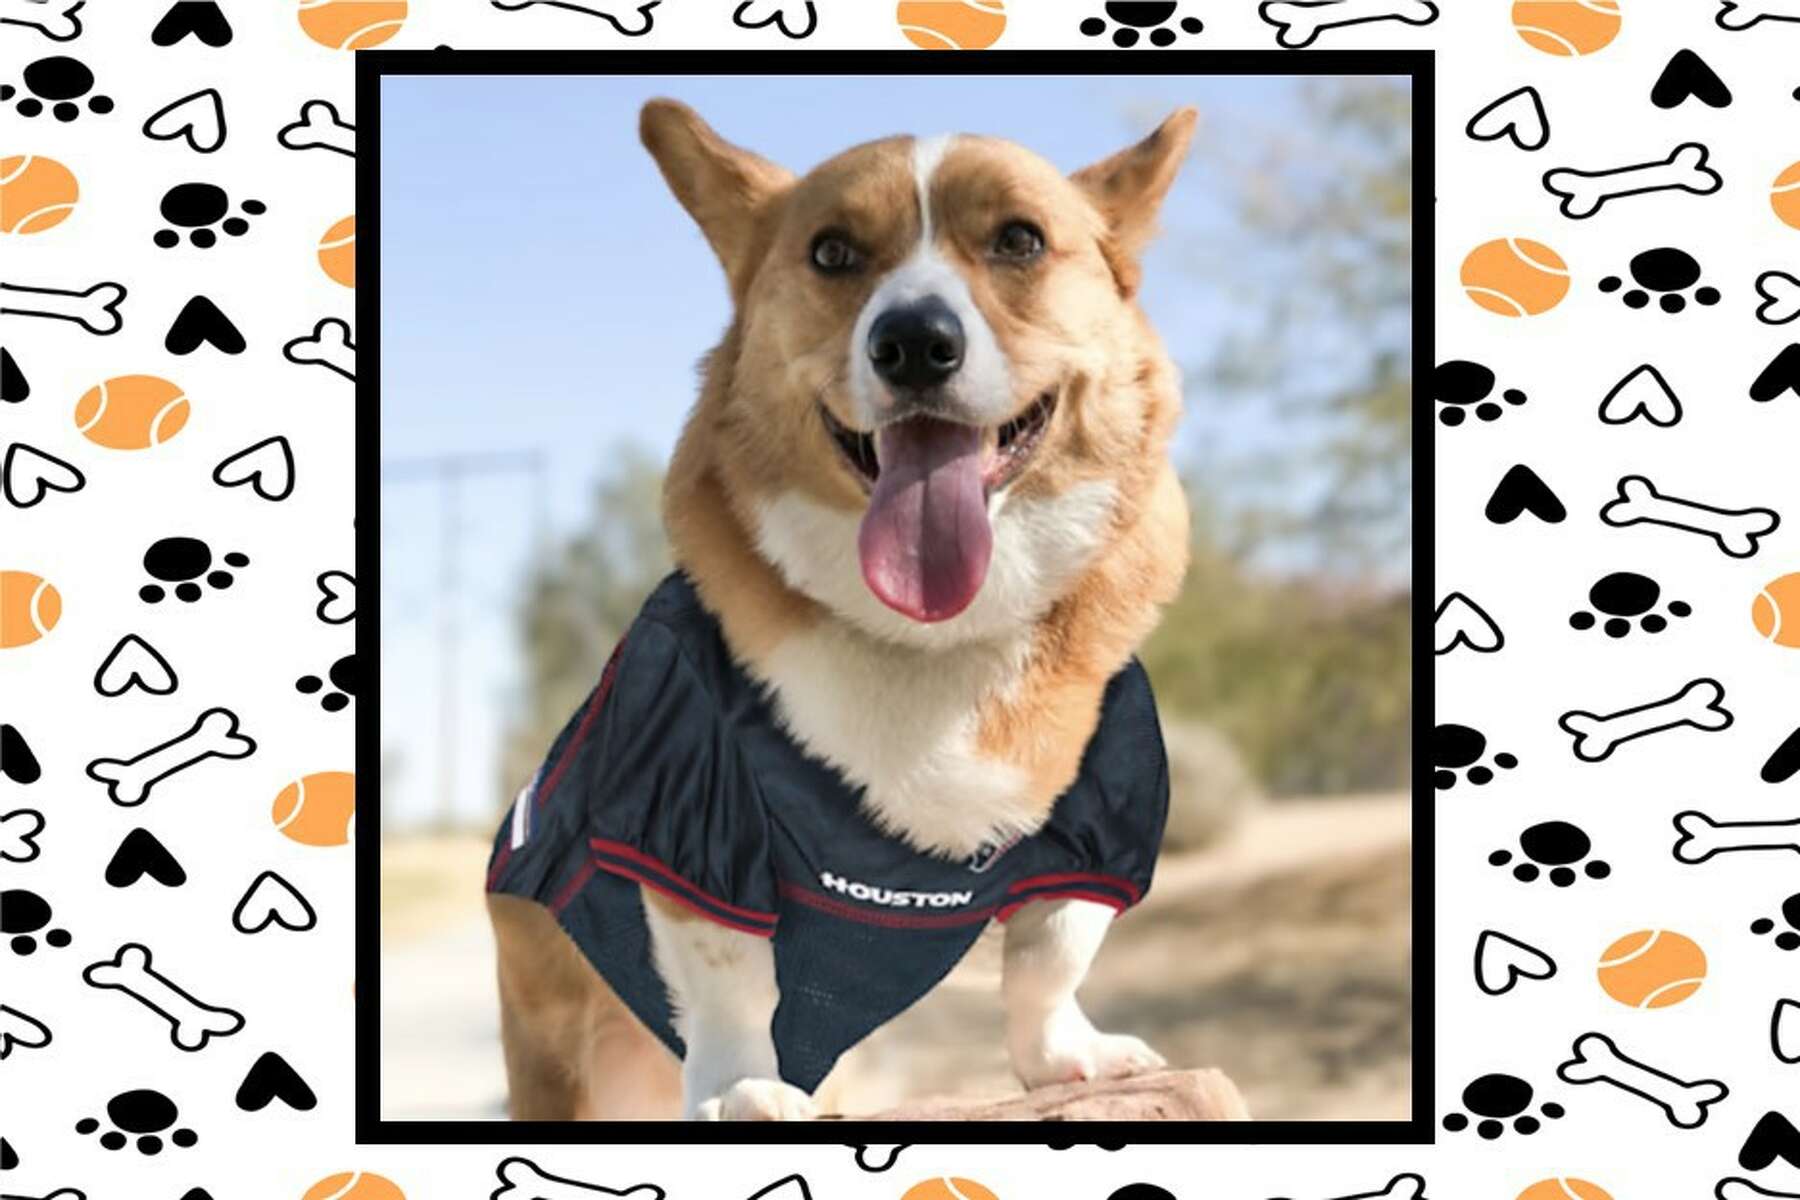 Pets First Houston Astros Reversible Medium Dog Collar | Petco